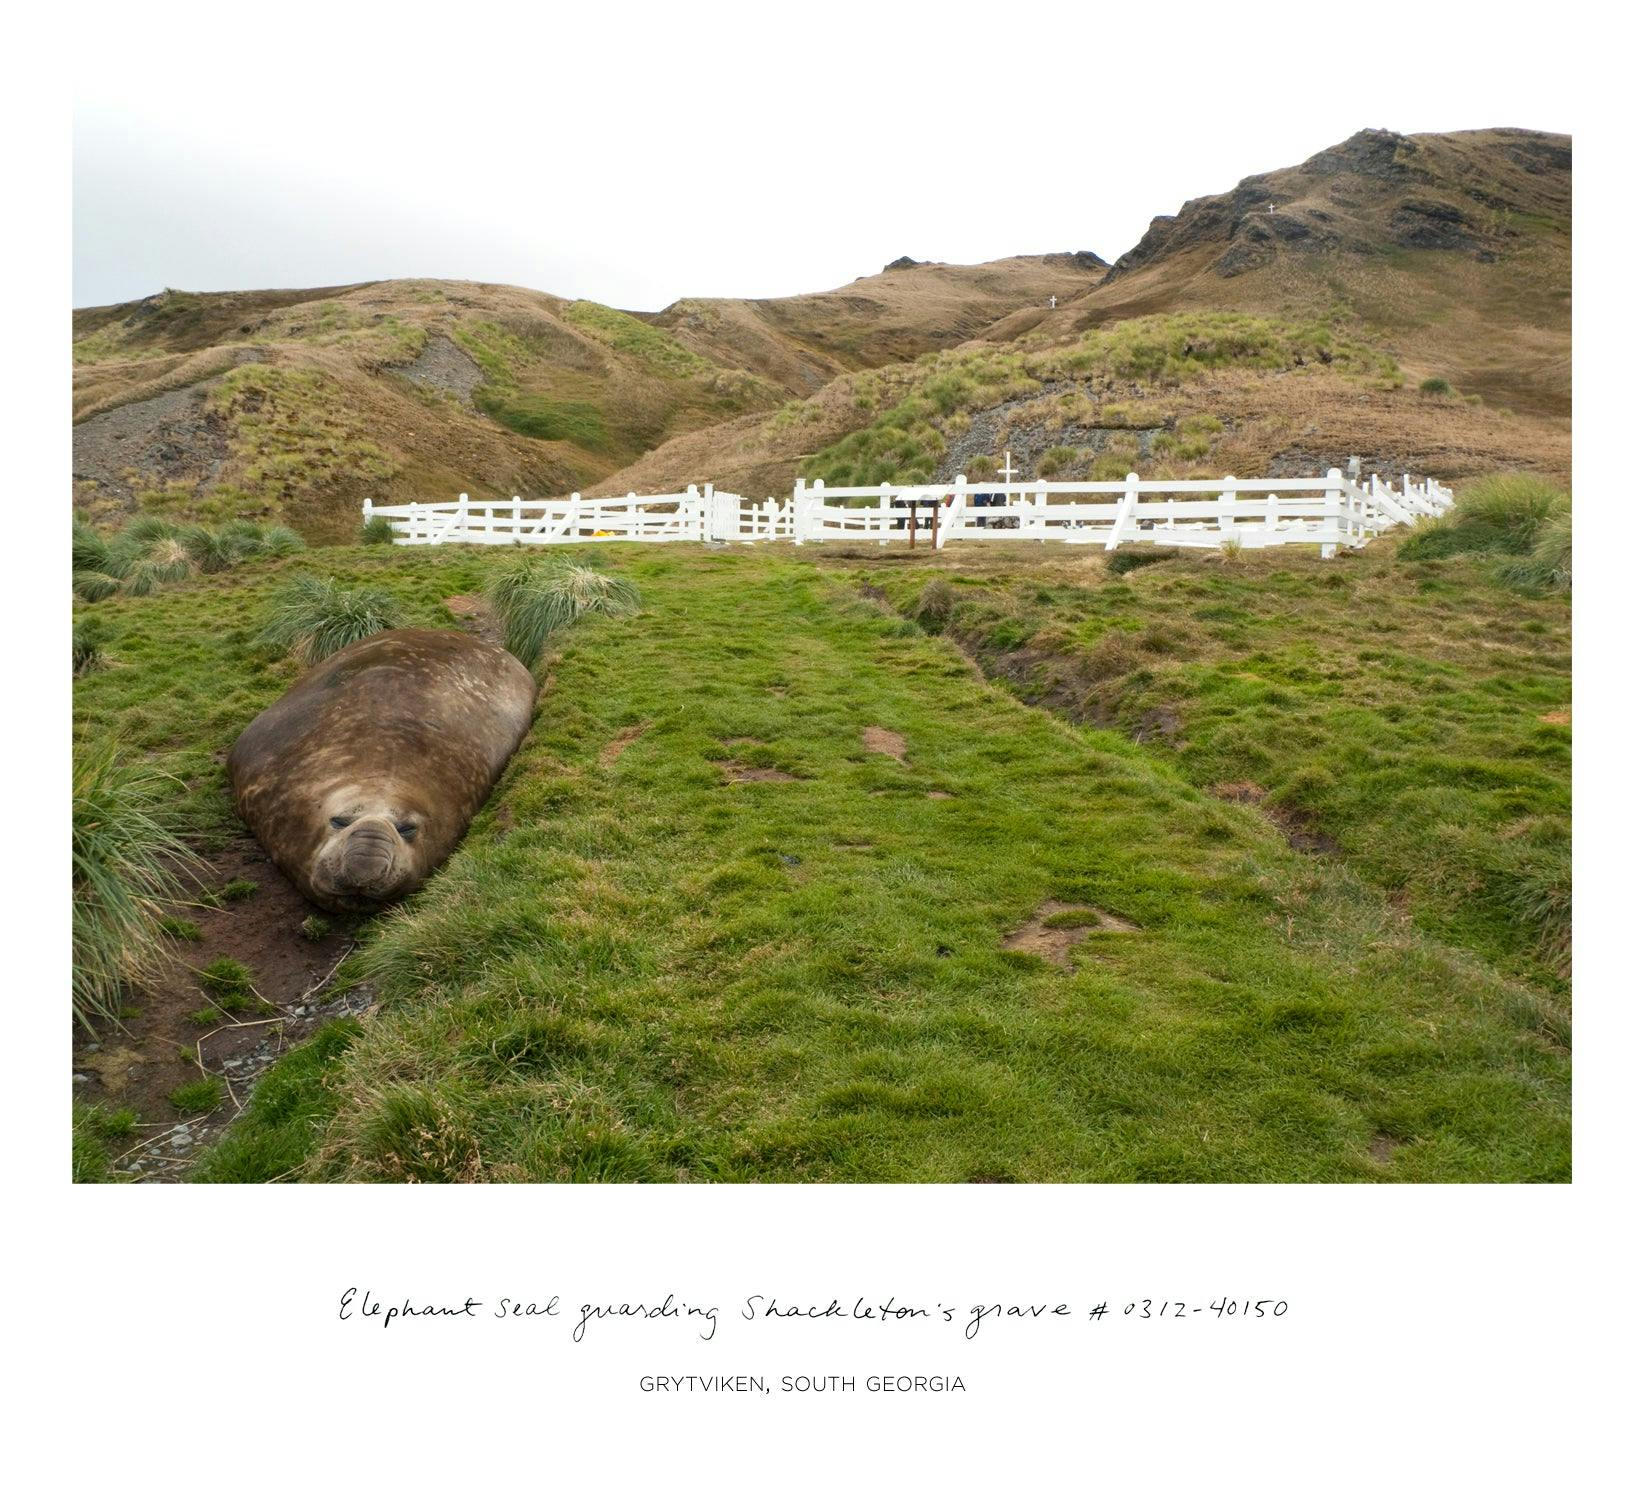 Rachel Sussman - Elephant seal guarding Shackleton's grave #0312-40150 (Grytviken, South Georgia - Photography